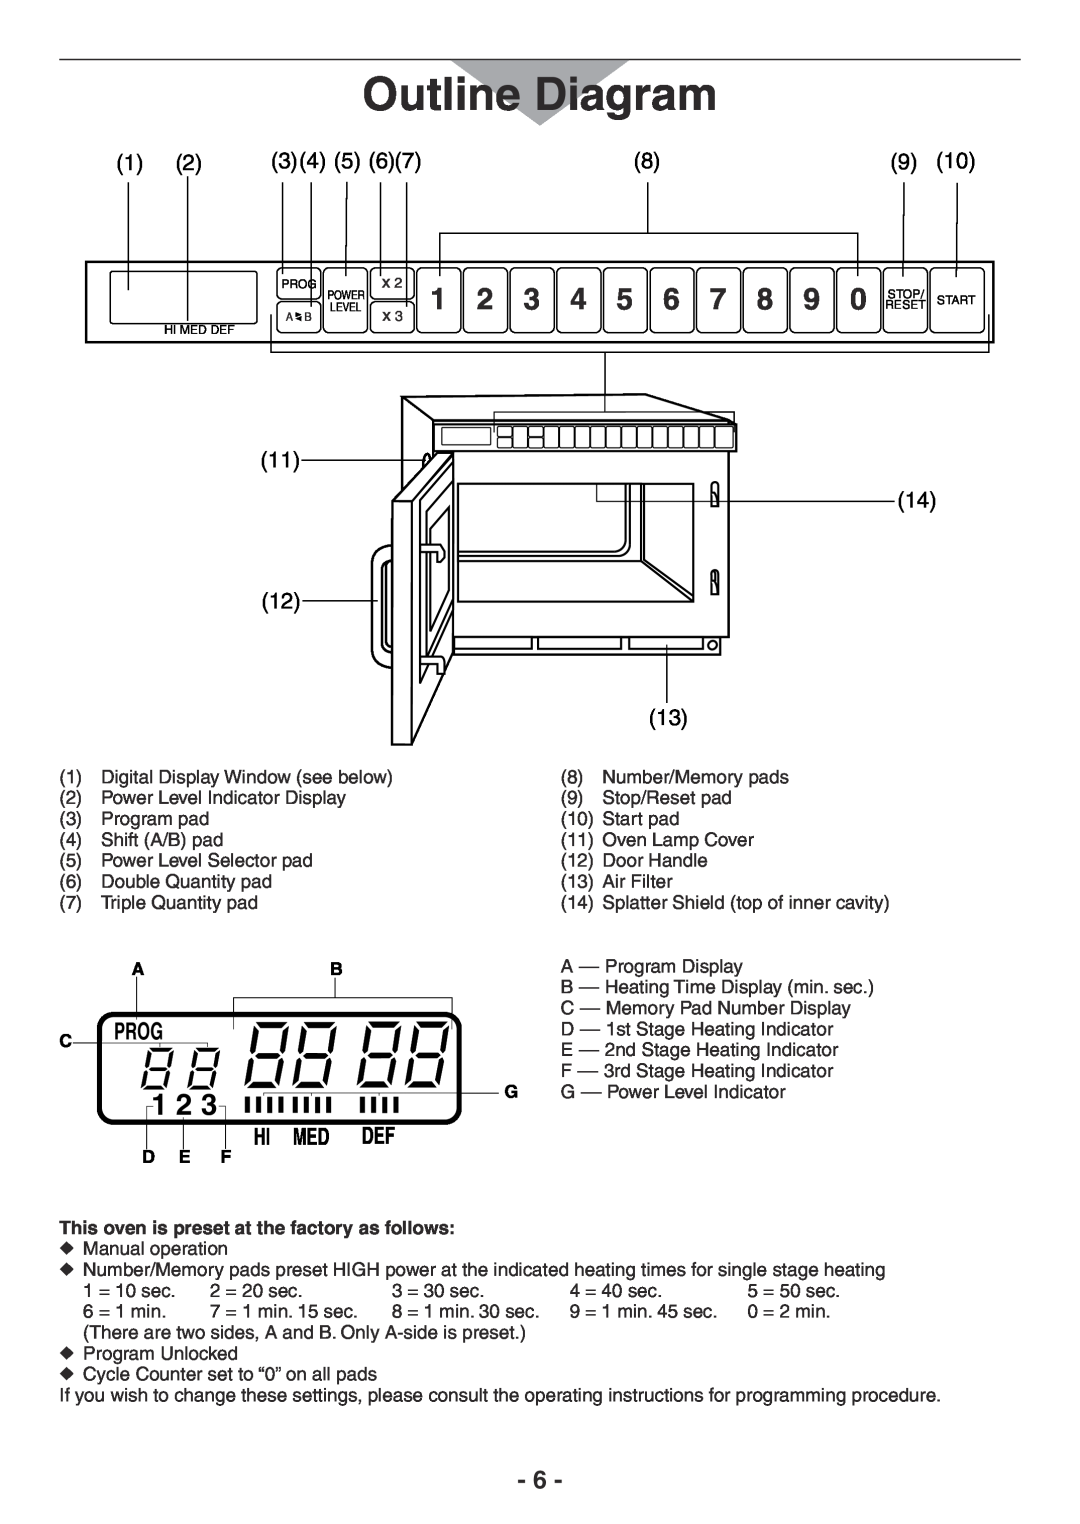 Panasonic NE-1257R, NE-2157R, NE-1757R, NE-1258R manual Outline Diagram, 1 2 3 4 5, C Prog, Hi Med Def 